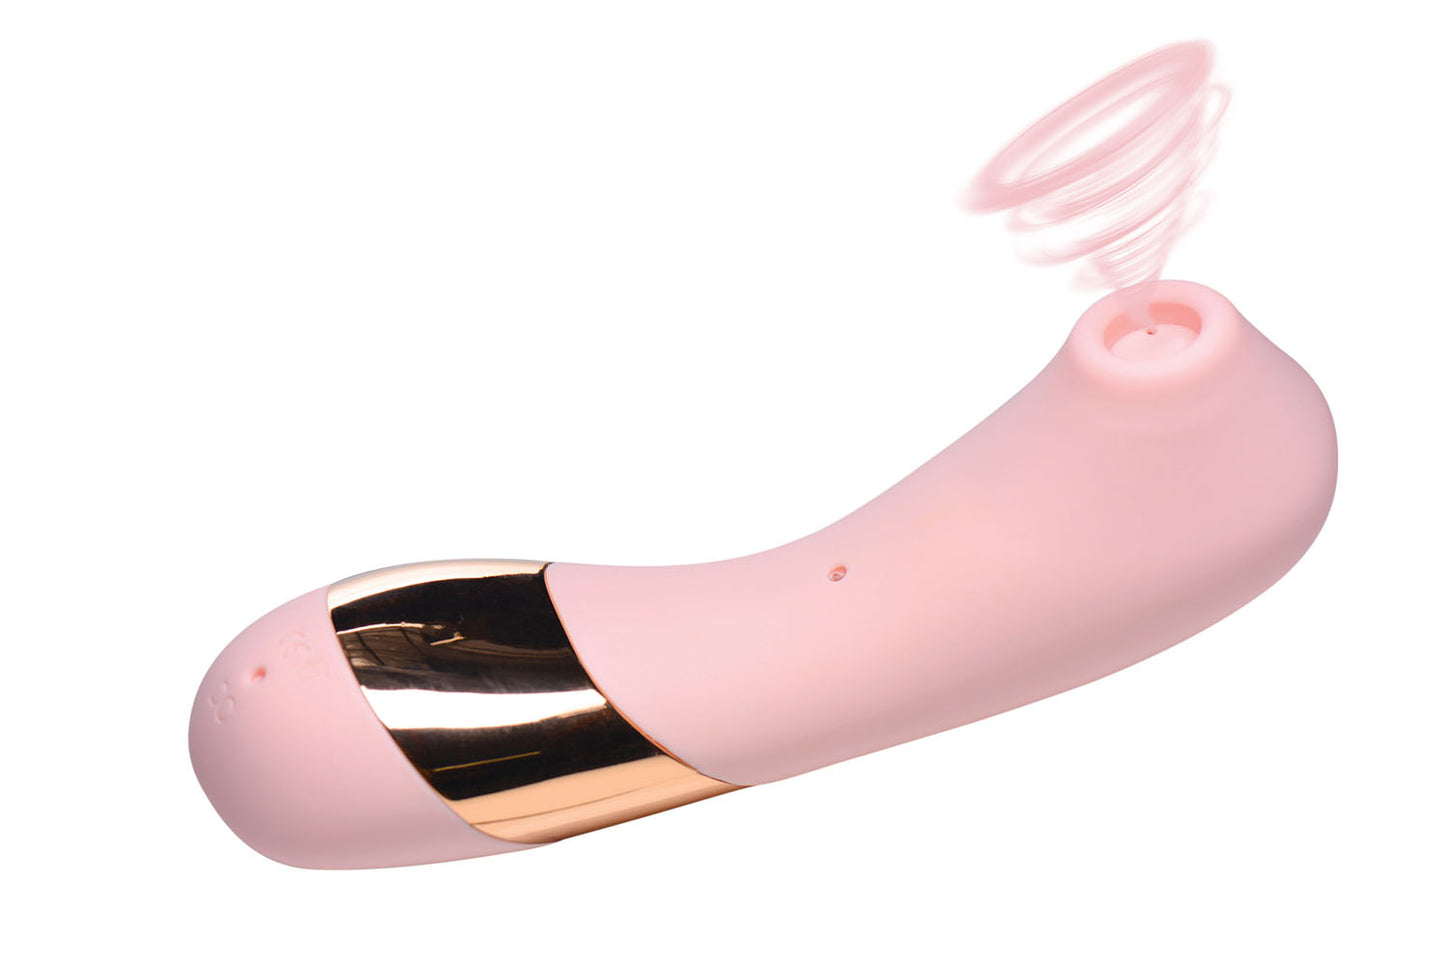 Shegasm Tickle Tickling Clit Stimulator With Suction - Pink INM-AF938